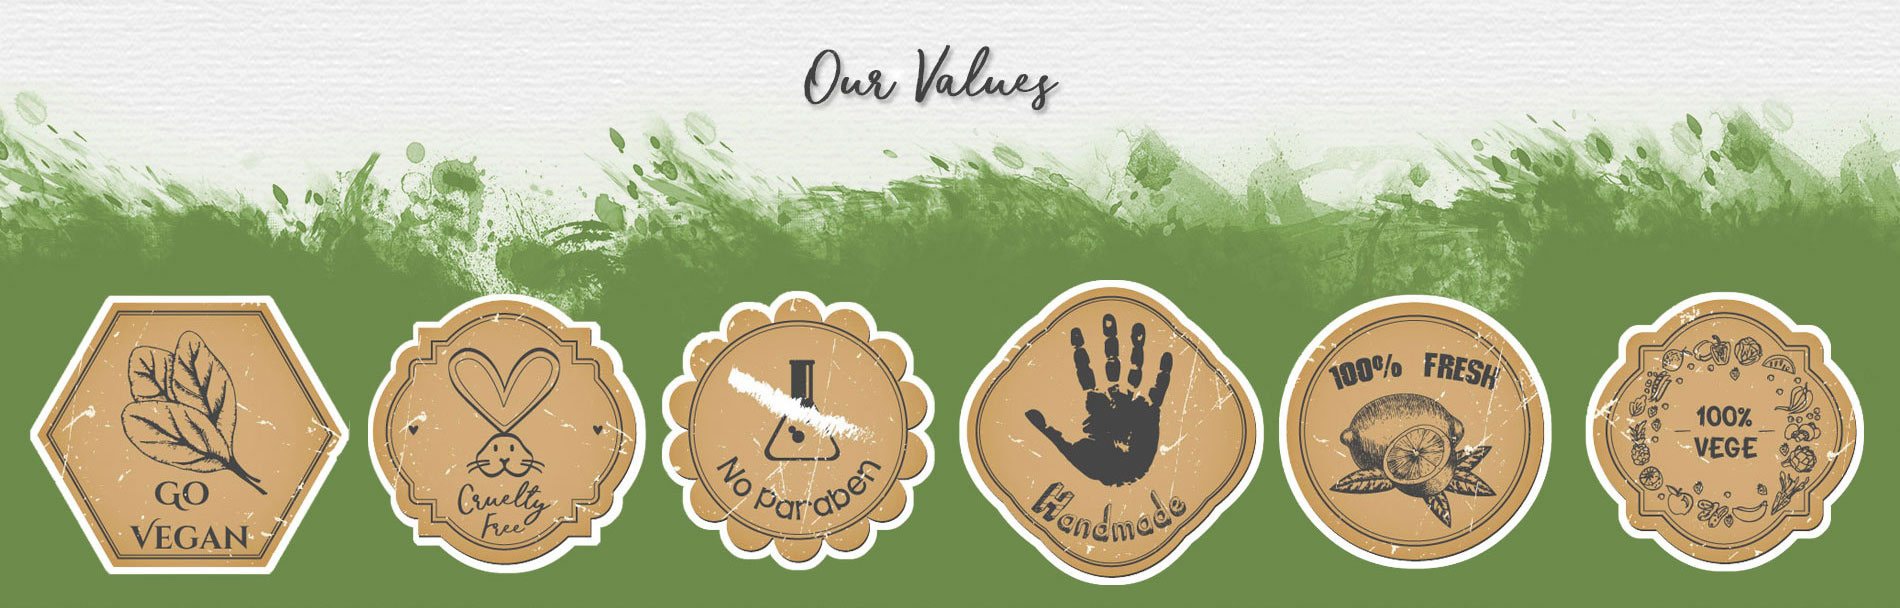 Our Values - Verthpc.com